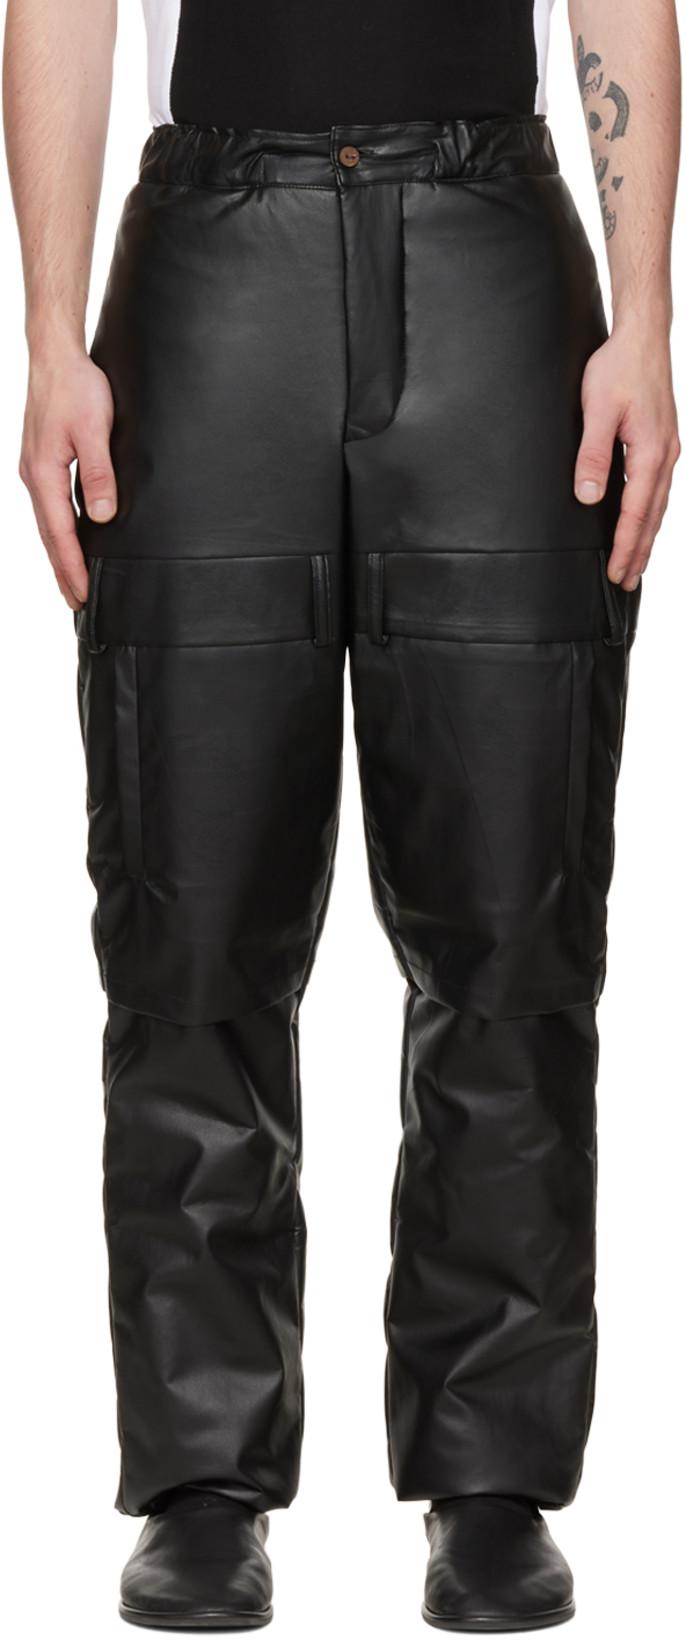 Black Paneled Faux Leather Pants by BLOKE